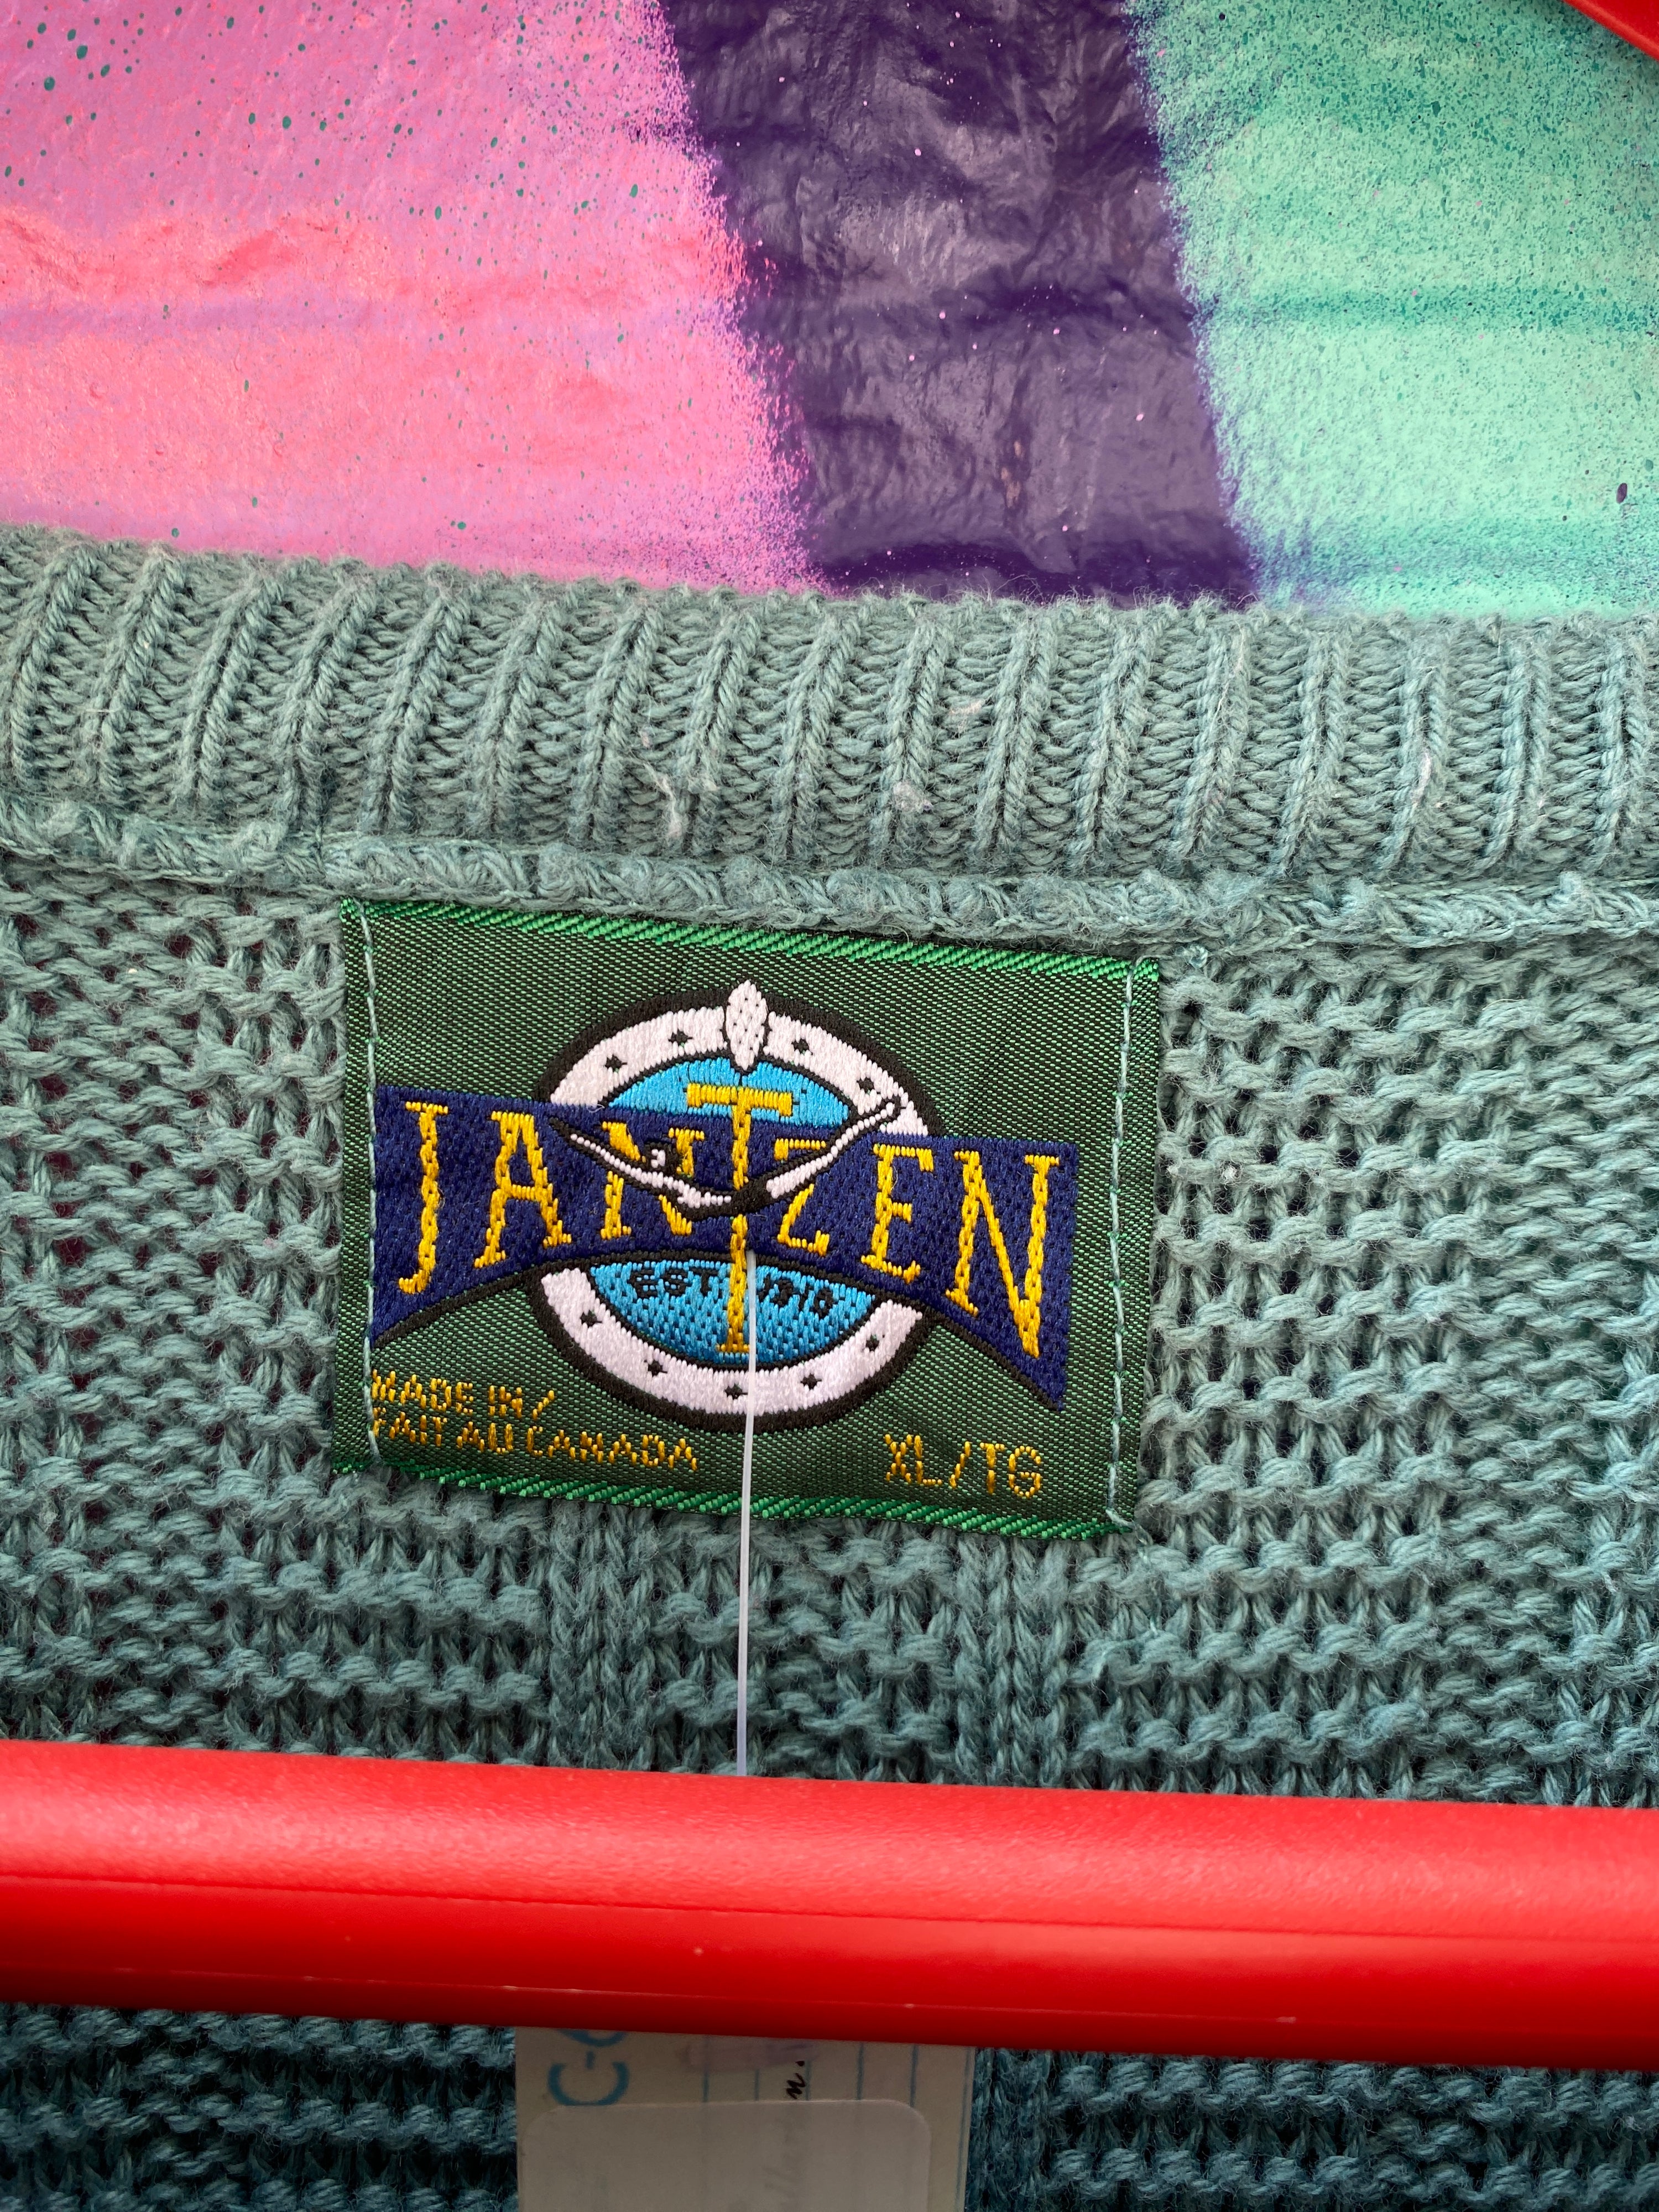 XL - Jantzen Vintage Knit Sweater Teal